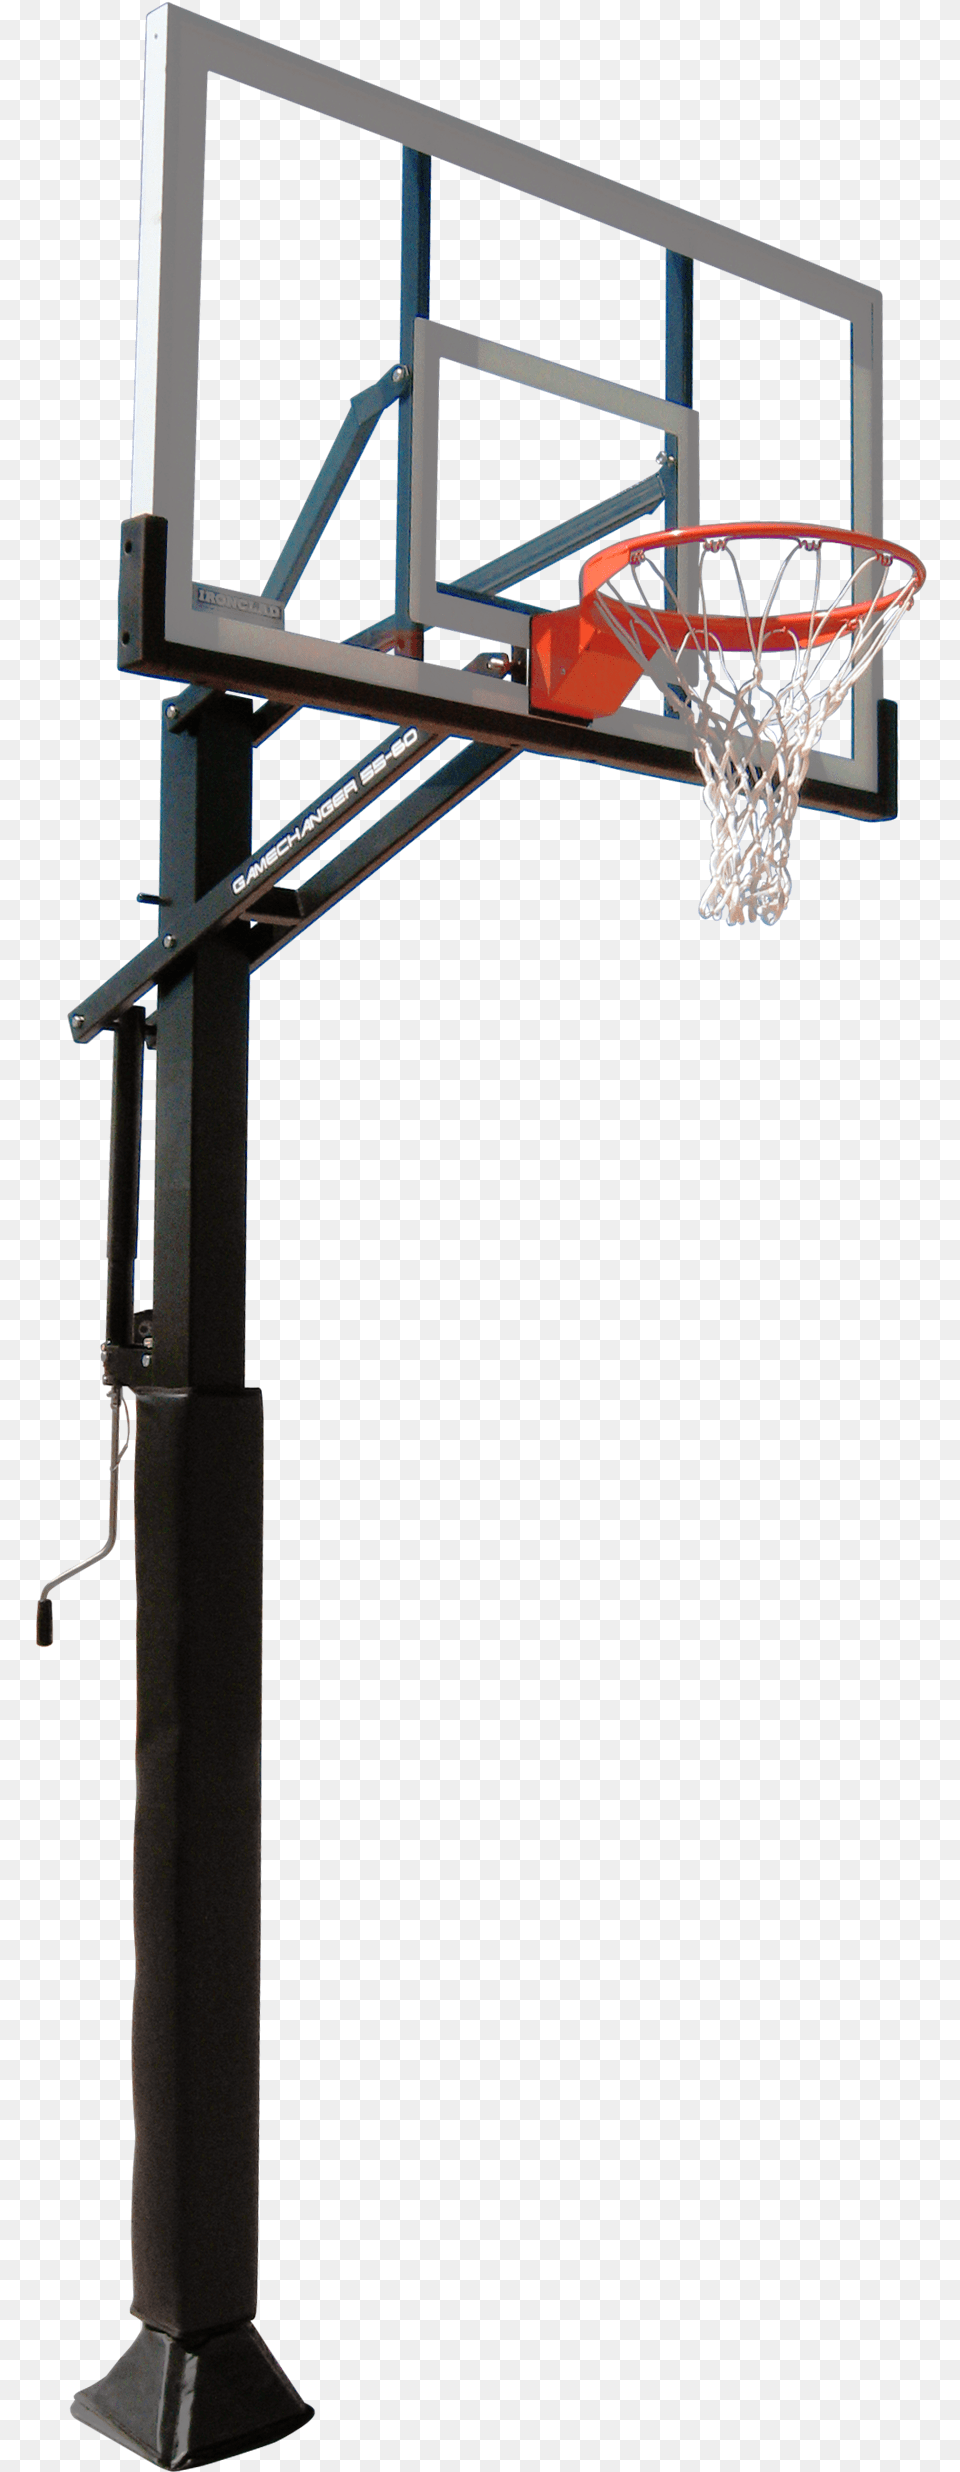 Pennsylvania Lifetime Ground Basketball Basketball Hoop Transparent Background Png Image